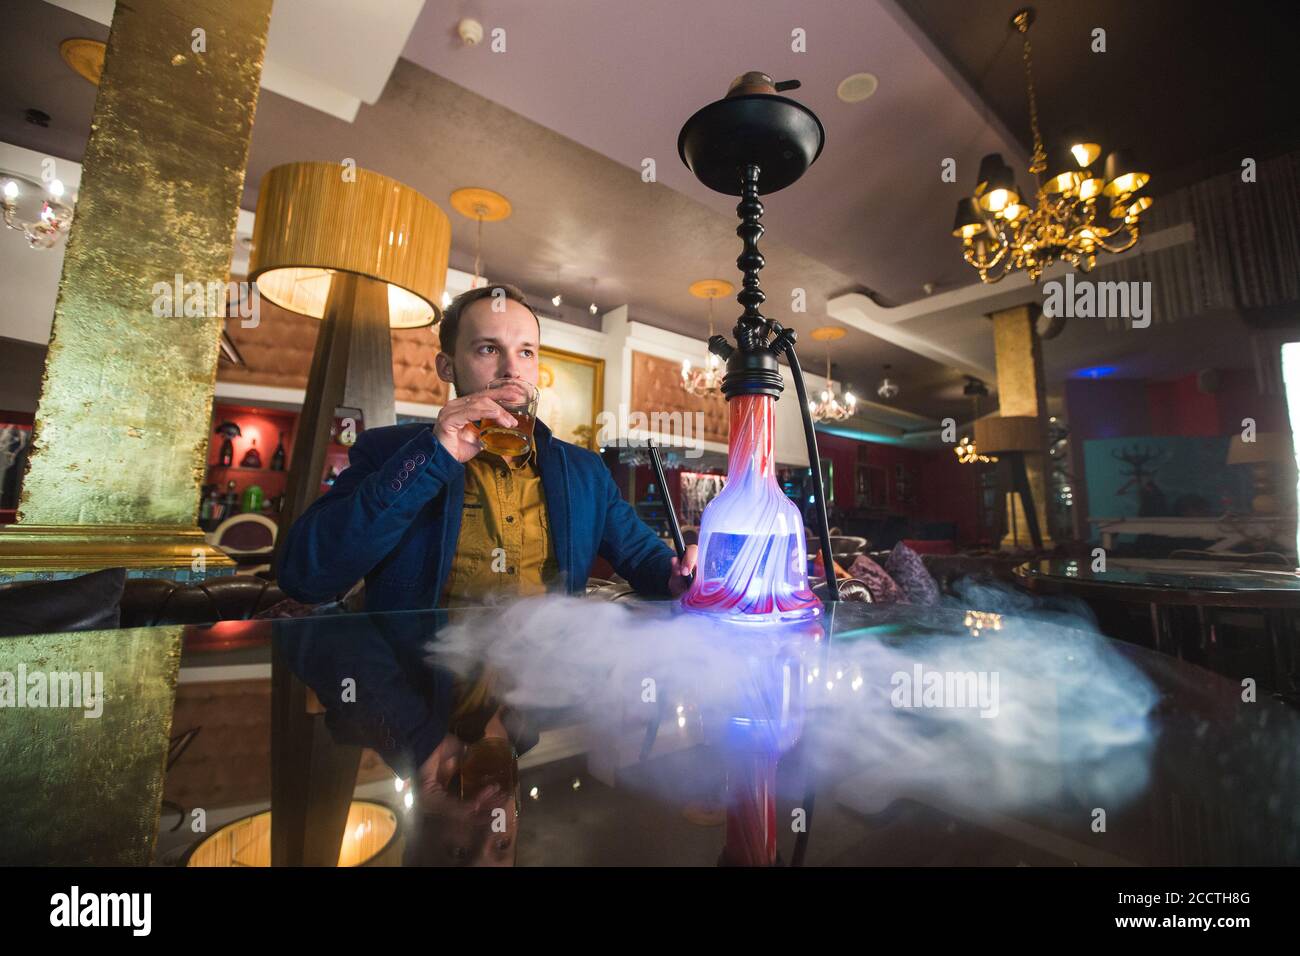 Smoking hookah. Man is blowing smoke in a cafe. Stock Photo